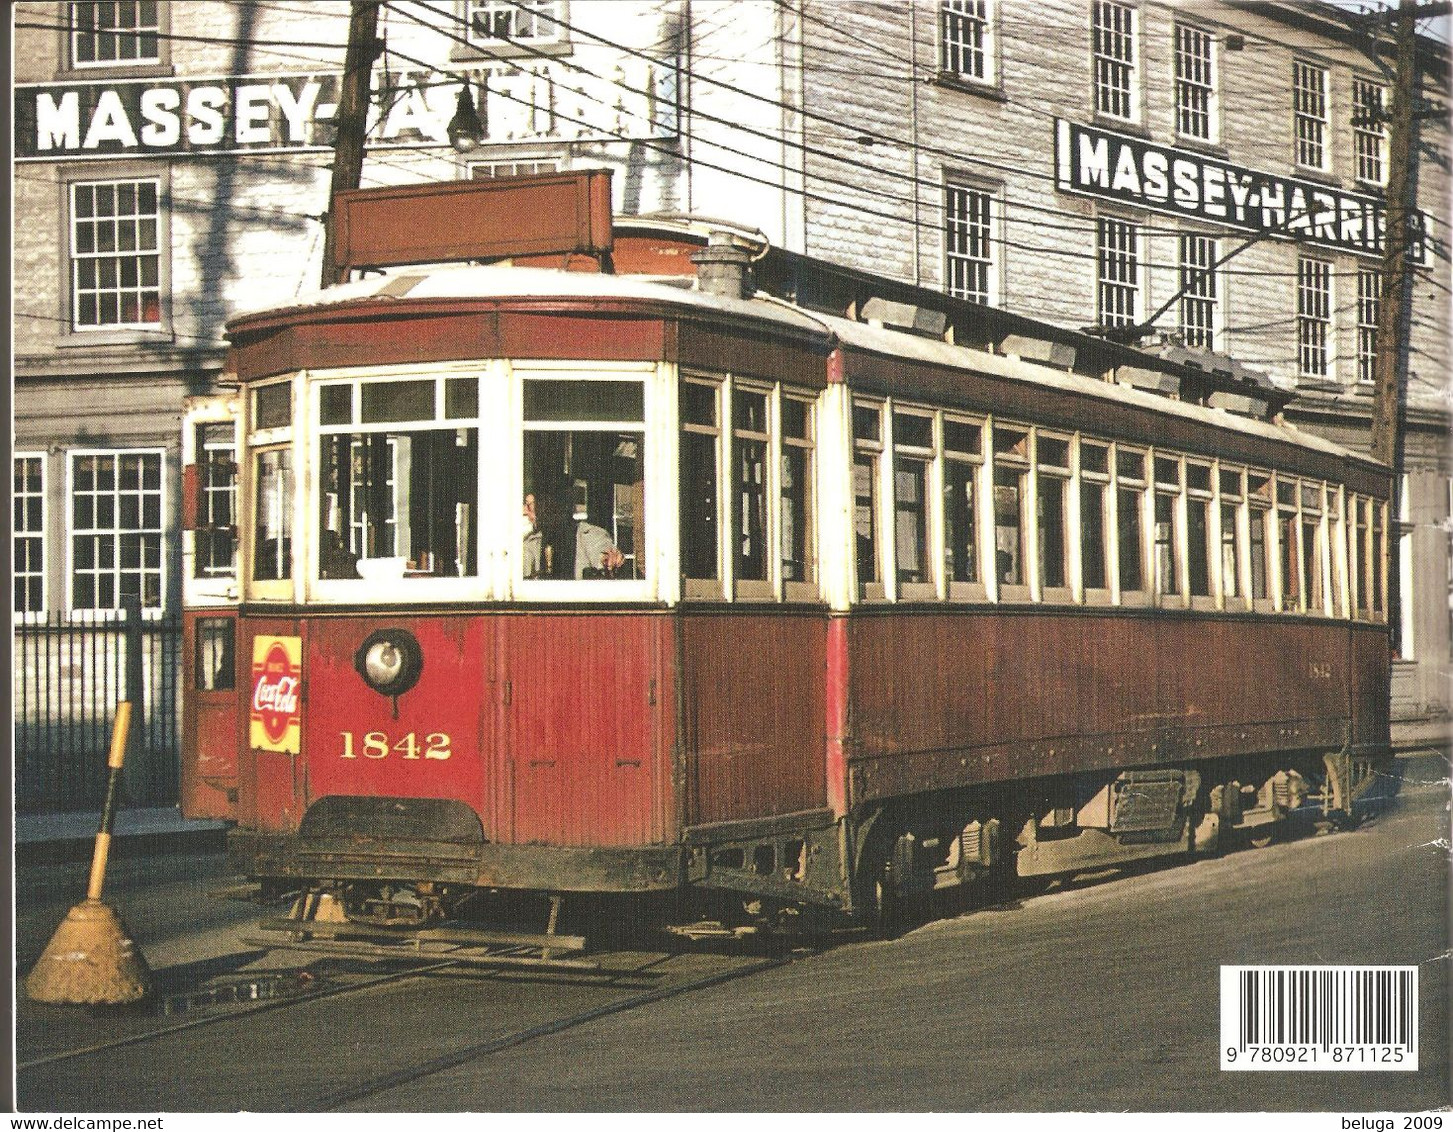 Quebec Railway Light & Power Company  Vol 2  Citadel Division Book By Grumley Tramways Canada - ISBN 9780921871125 - Kanada